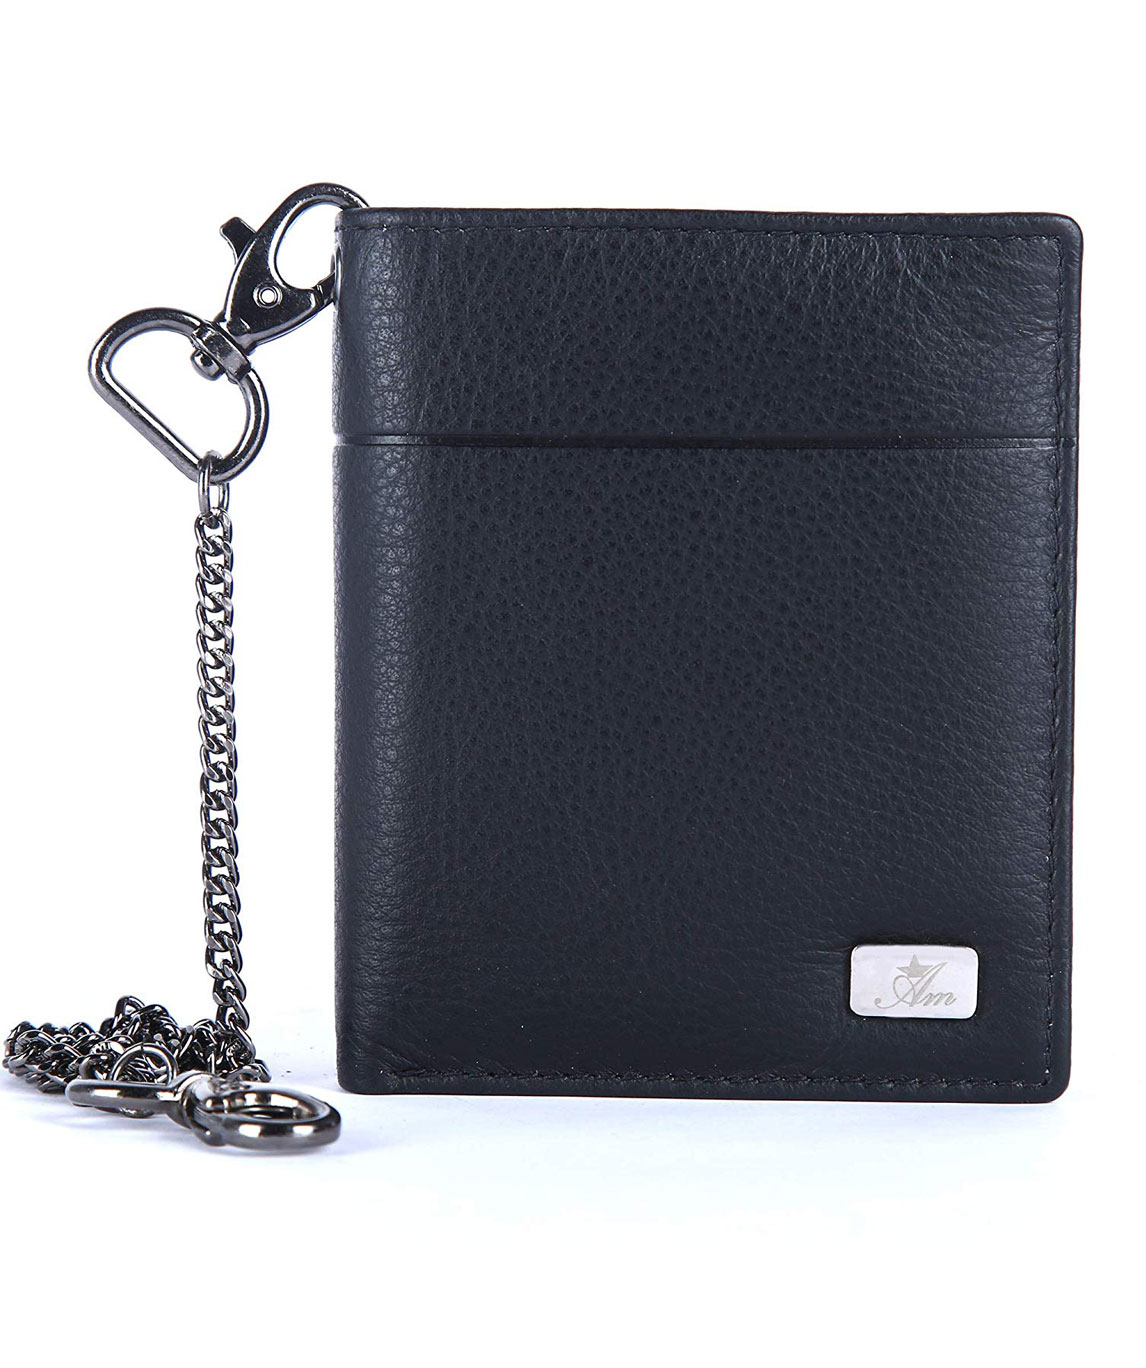 AM LEATHER Bi Fold Genuine Leather Wallet Biker Black Premium Quality/Hand  Crafted Purse/Wallet for Men